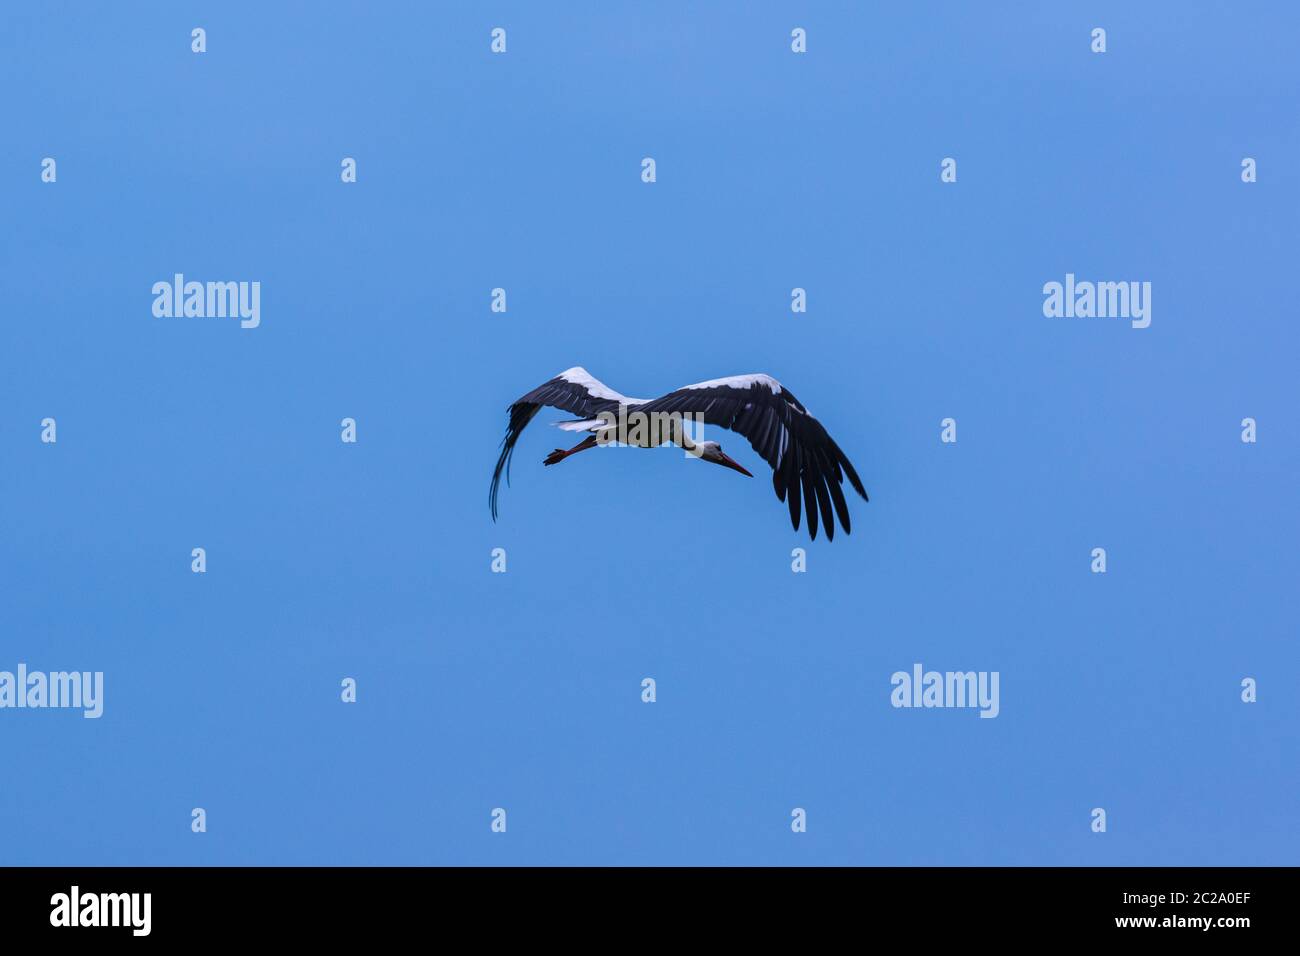 a flying stork Stock Photo